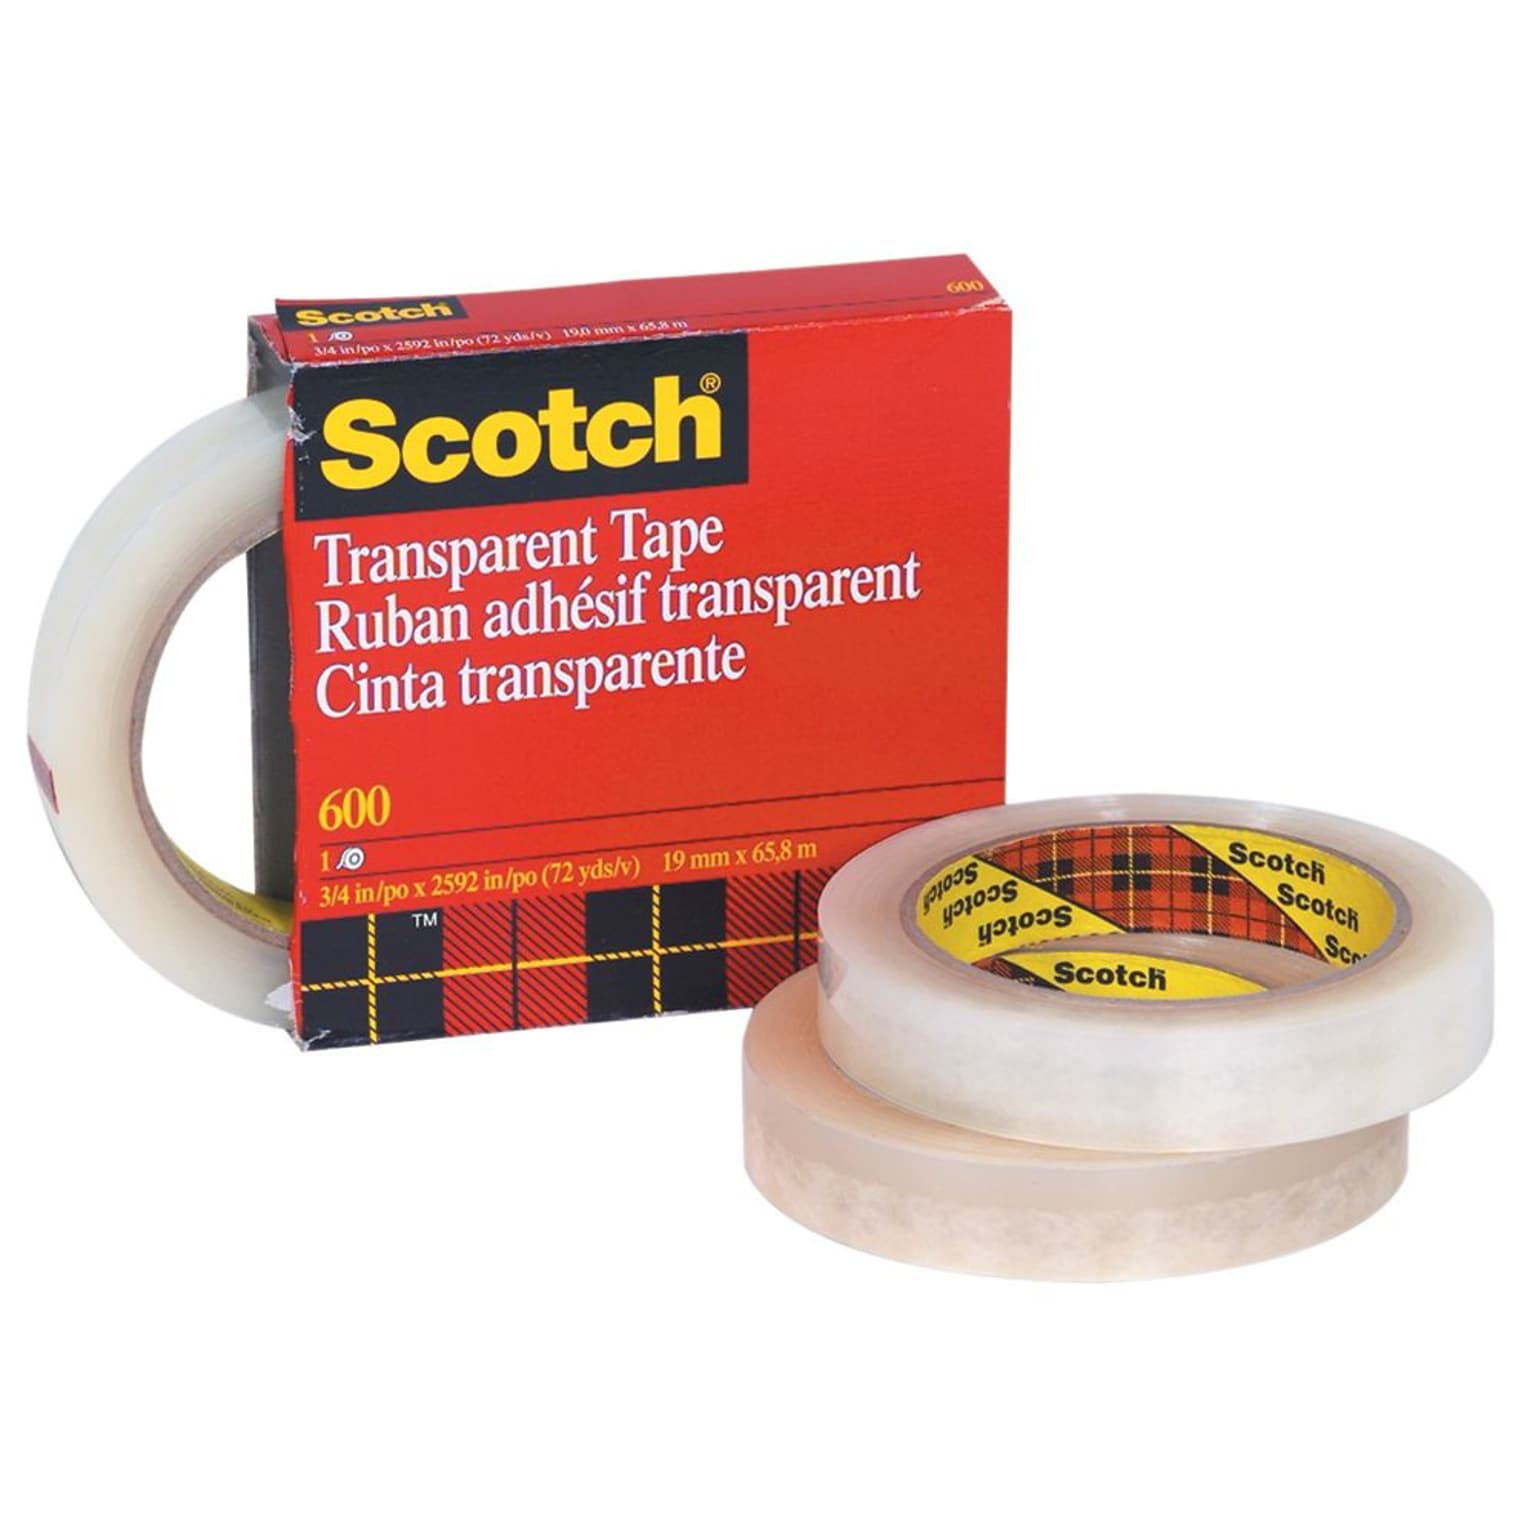 3M Scotch MultiTask Transparent Tape, 1 x 72 yds., 12 Rolls (T96560012PK)